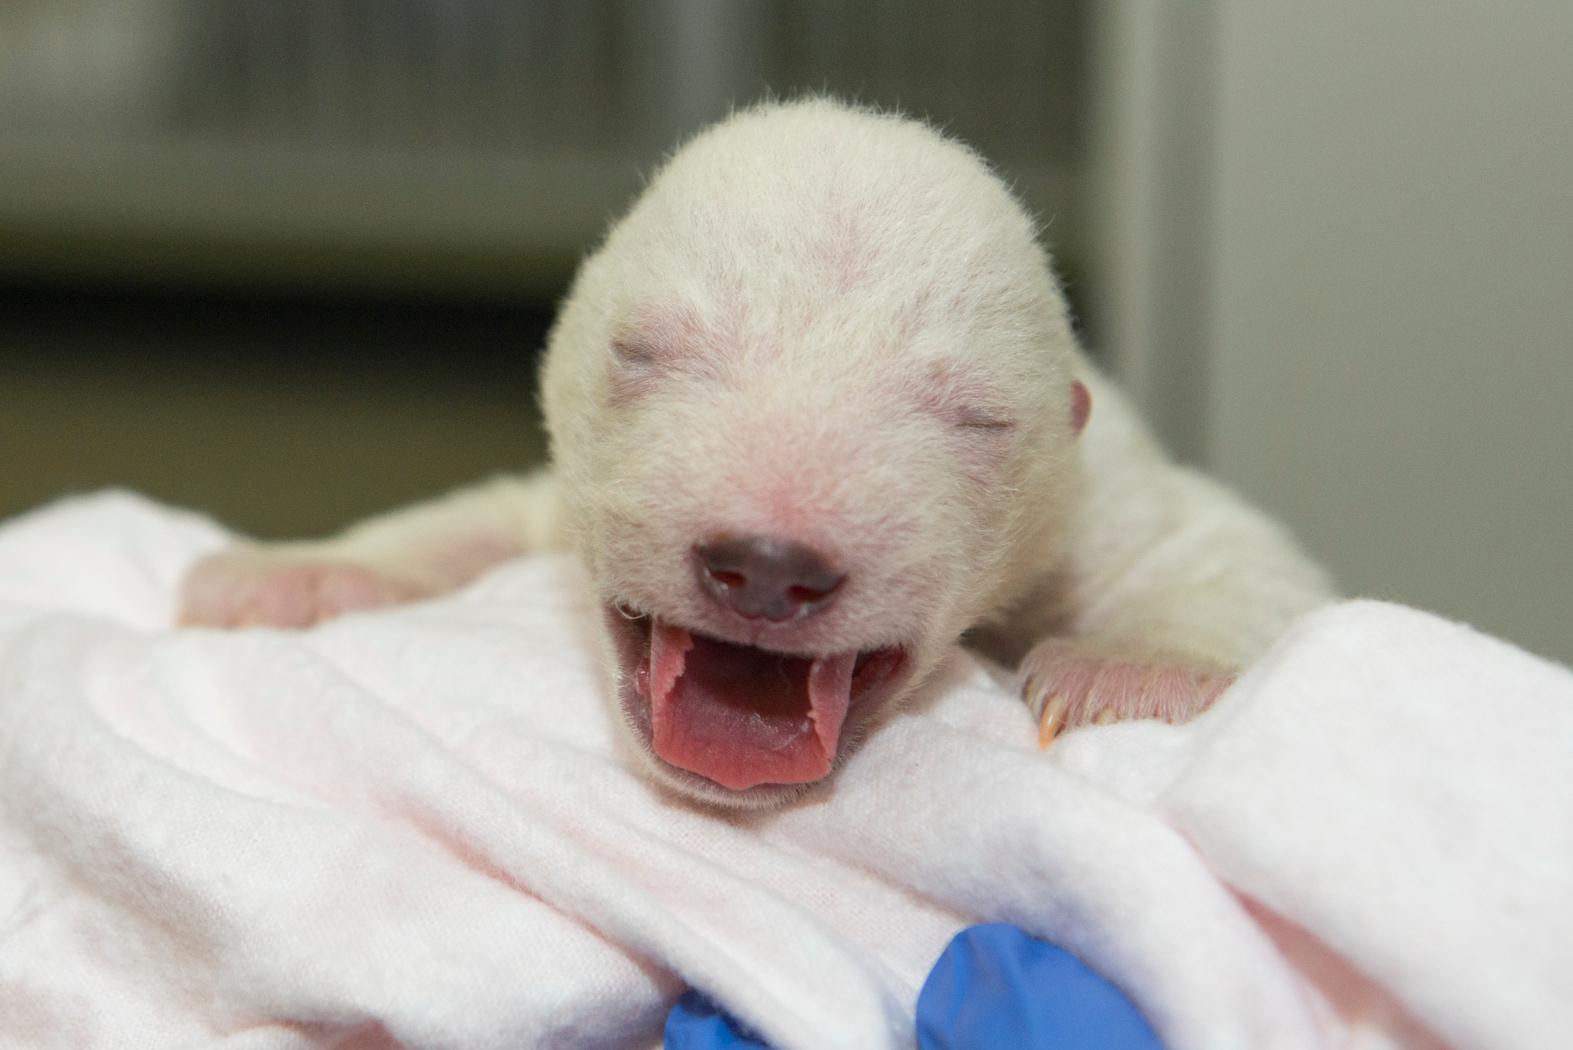 Newborn polar bear cub pulled from mother, den; still alive, healthy WTTE